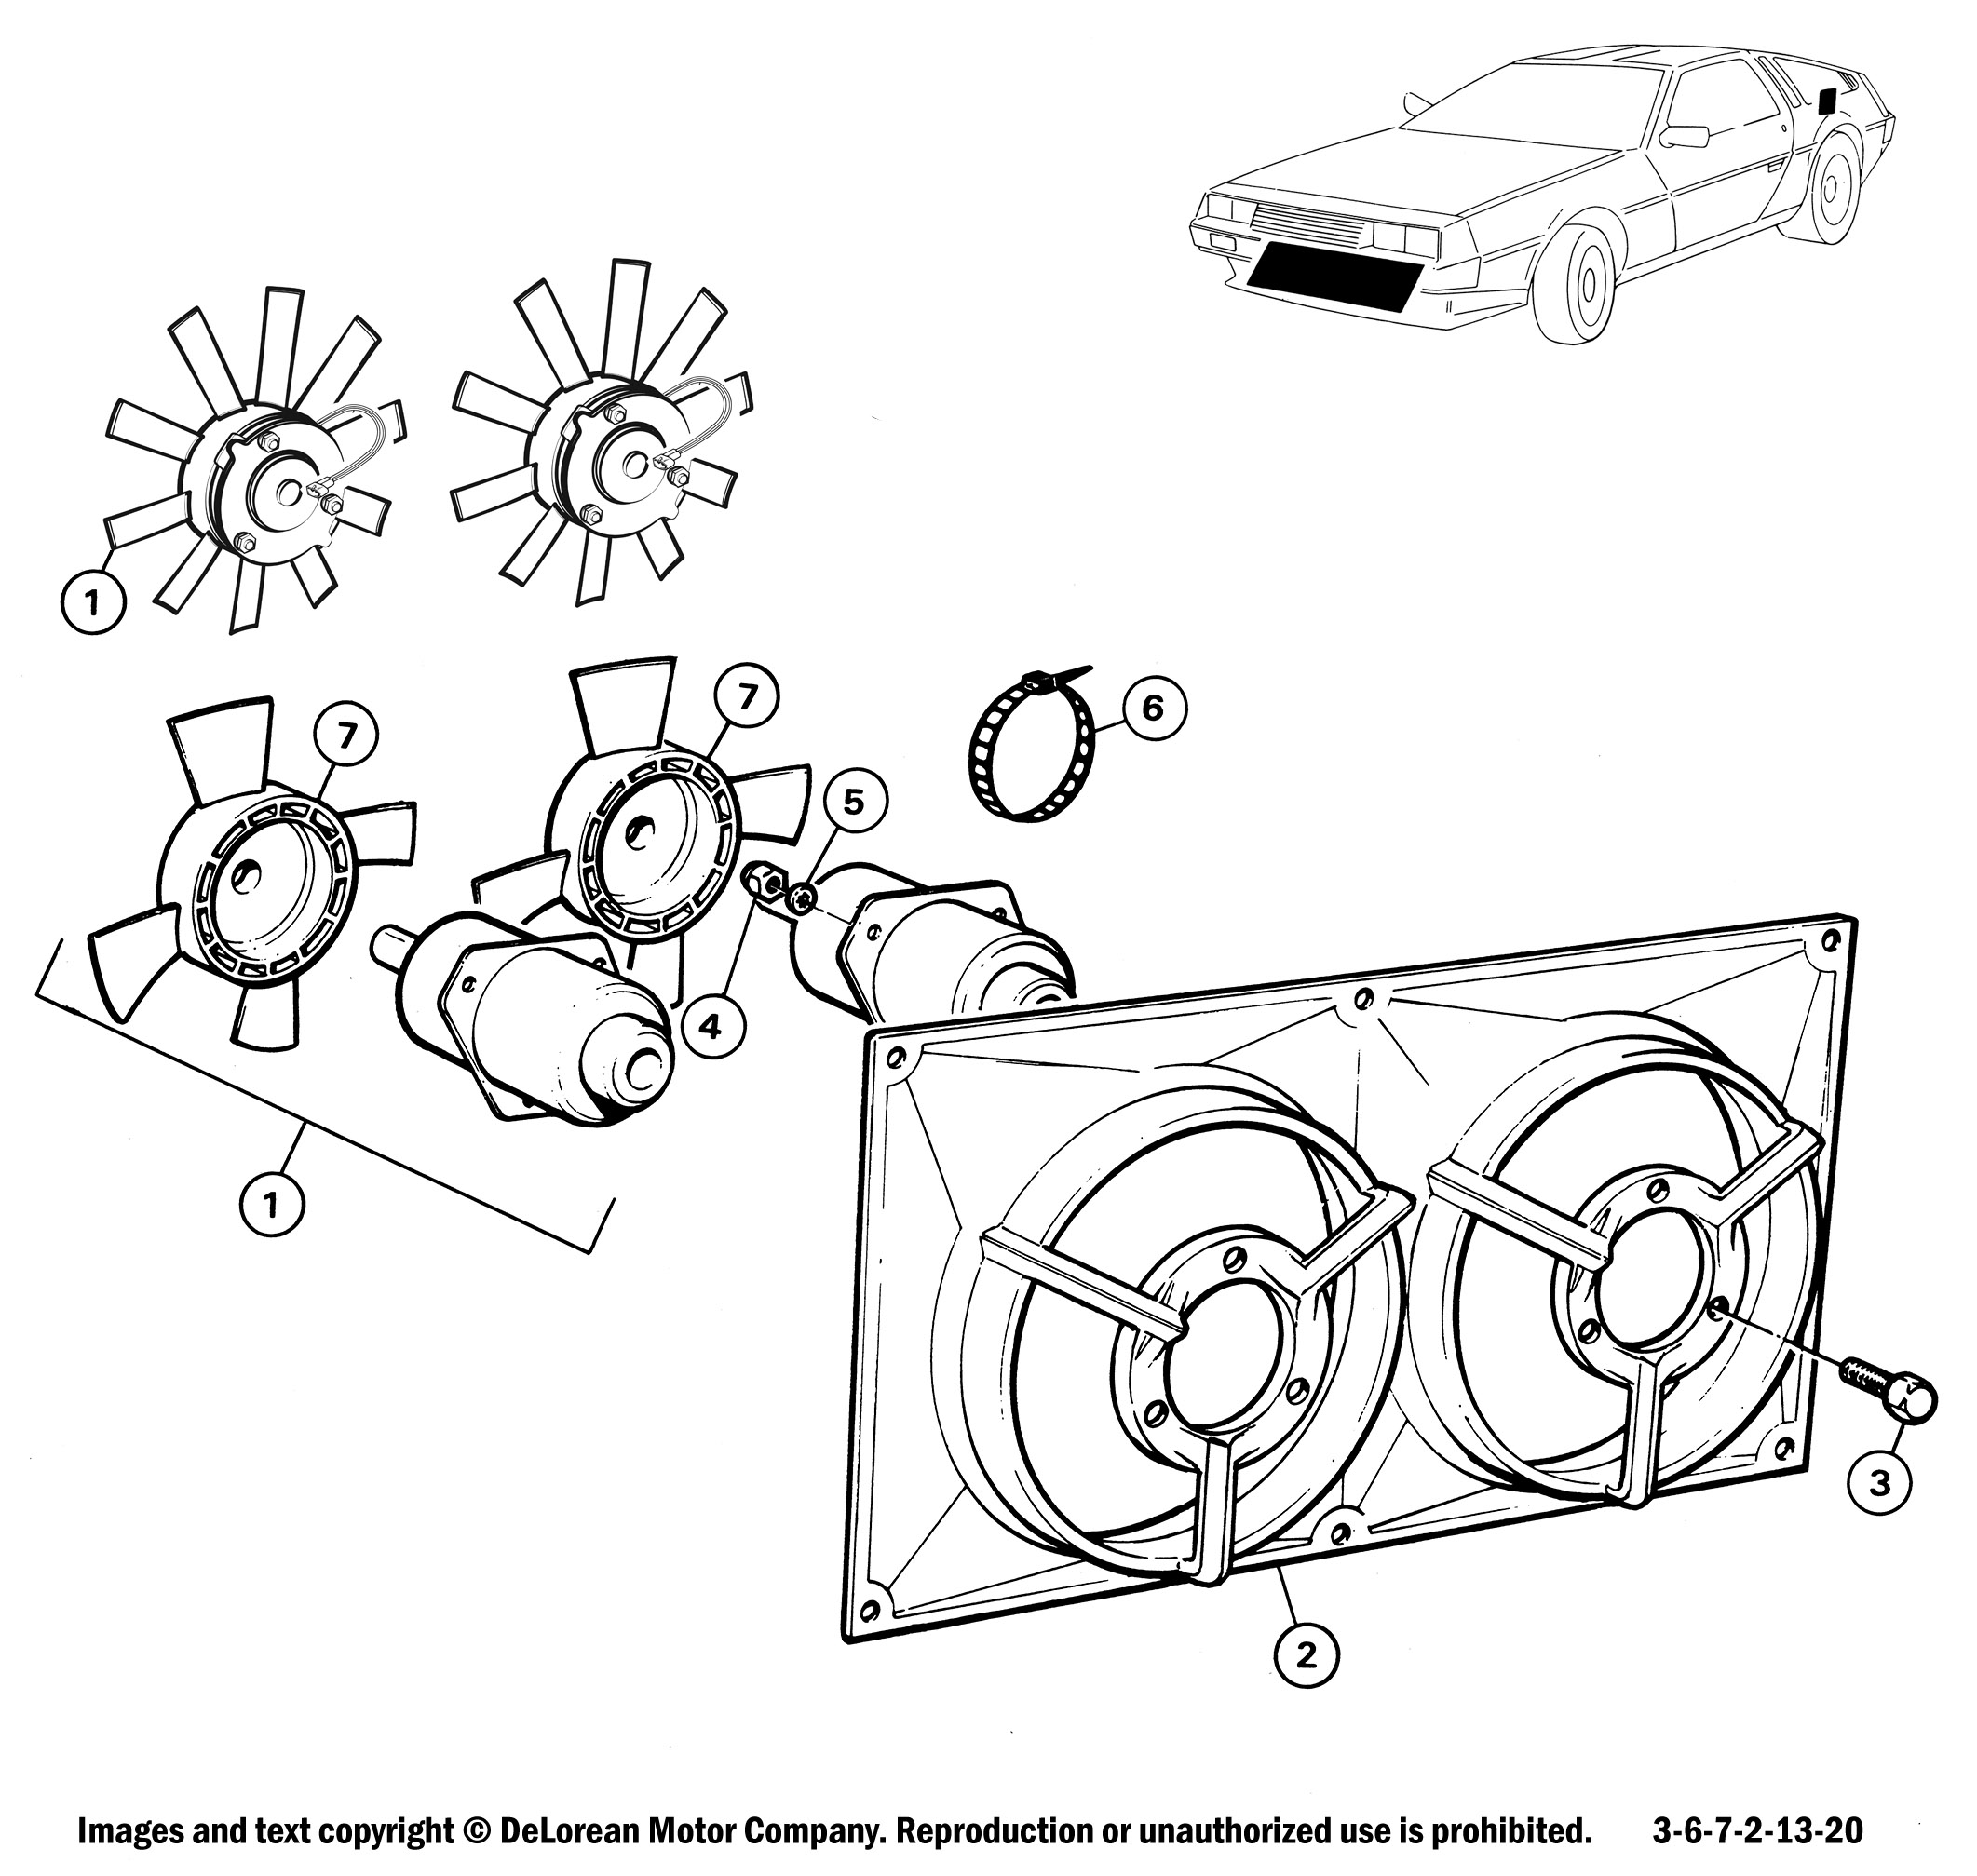 Radiator Cooling Fans - DeLorean Motor Company